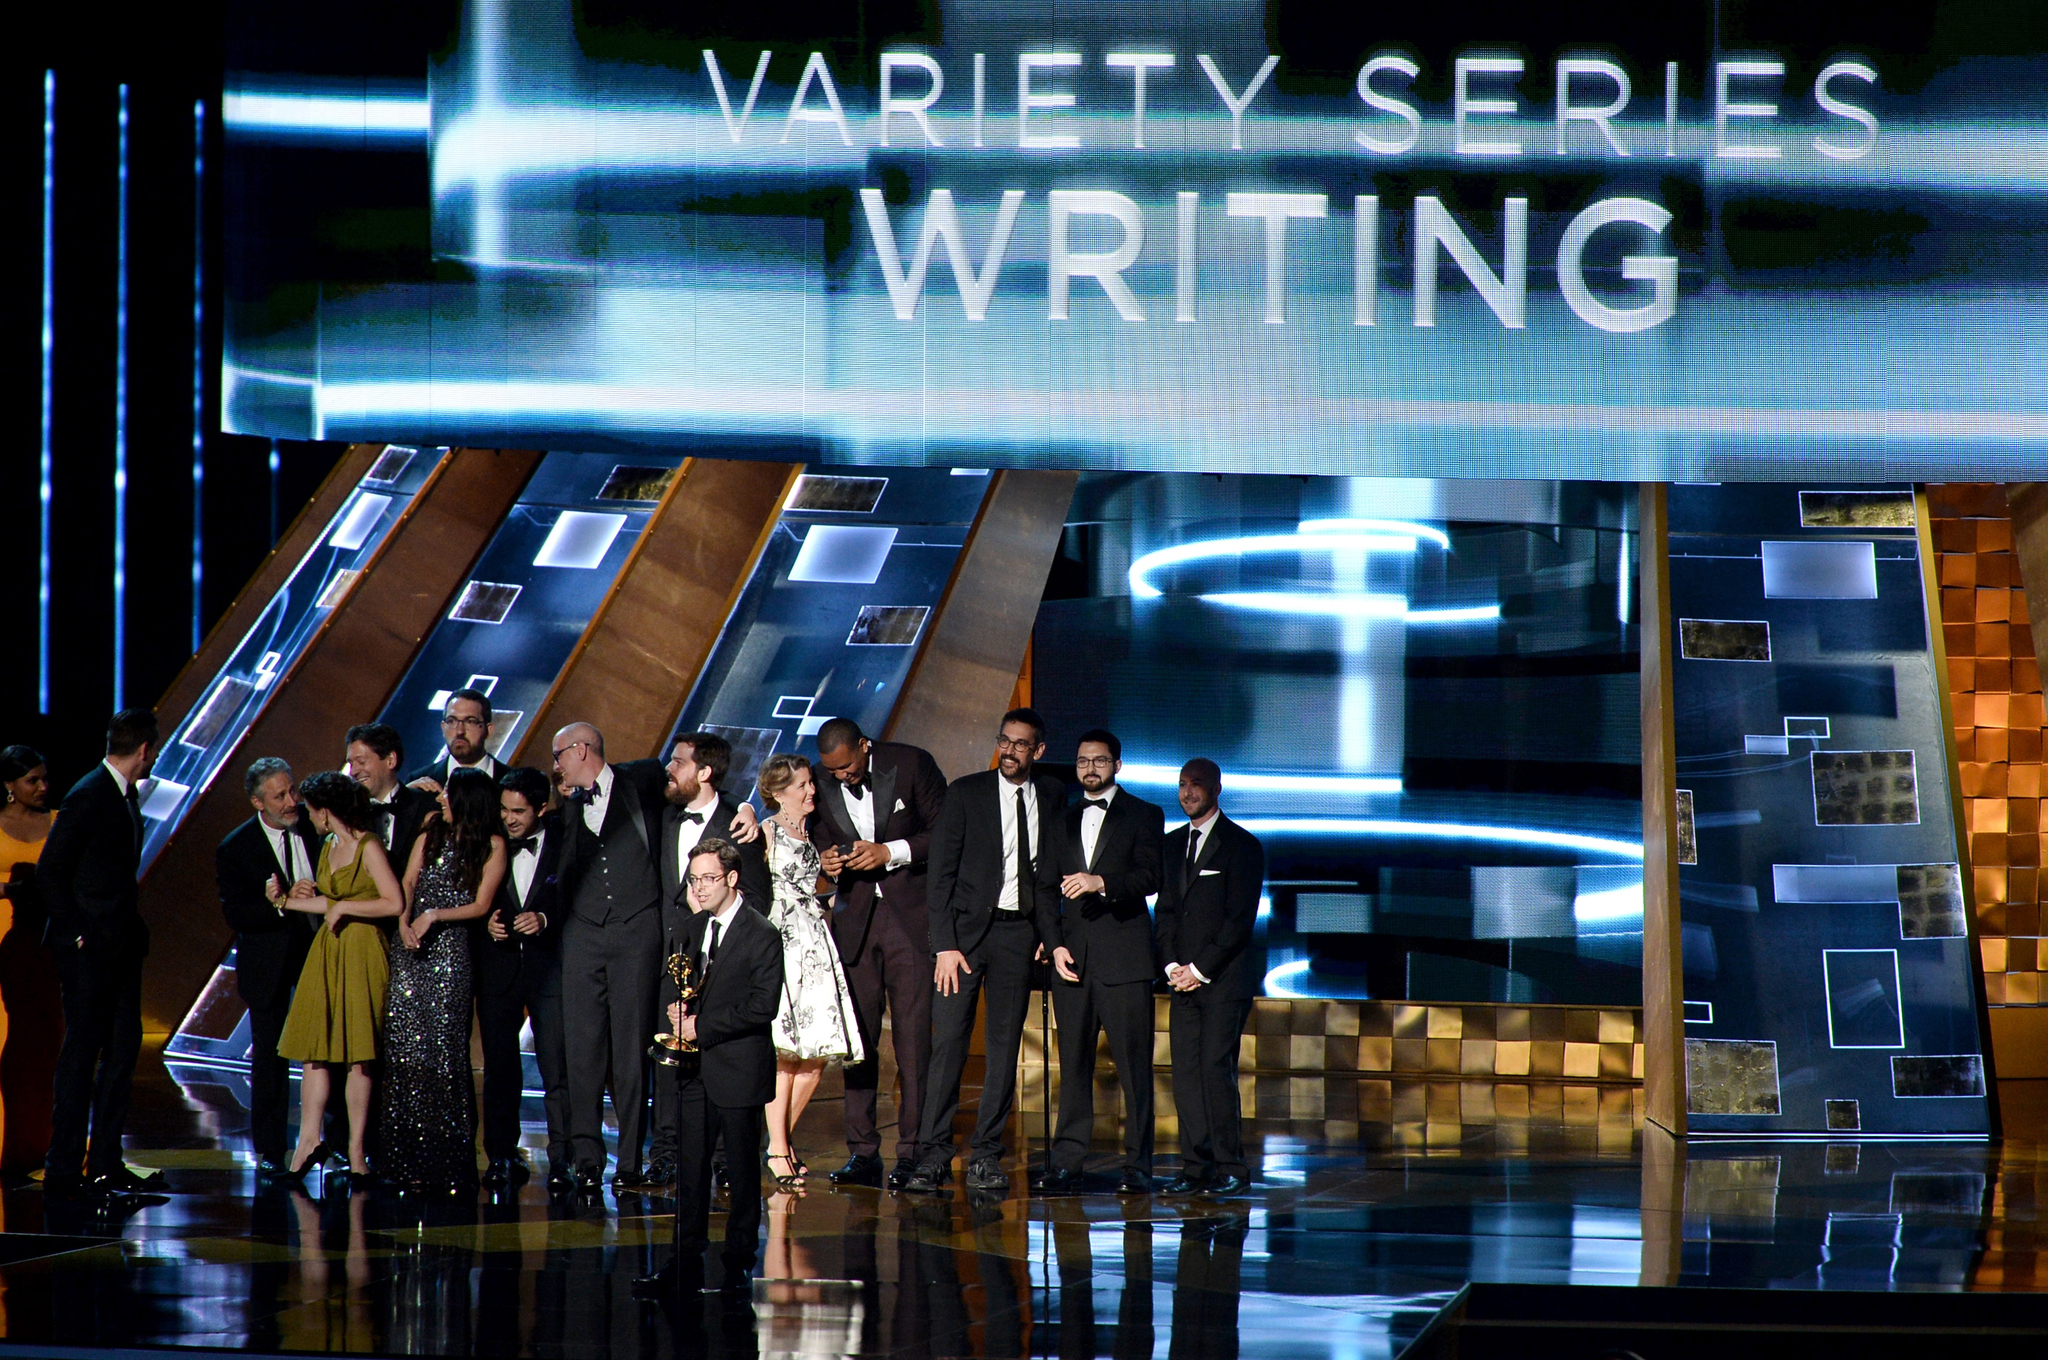 Elliott Kalan at event of The 67th Primetime Emmy Awards (2015)